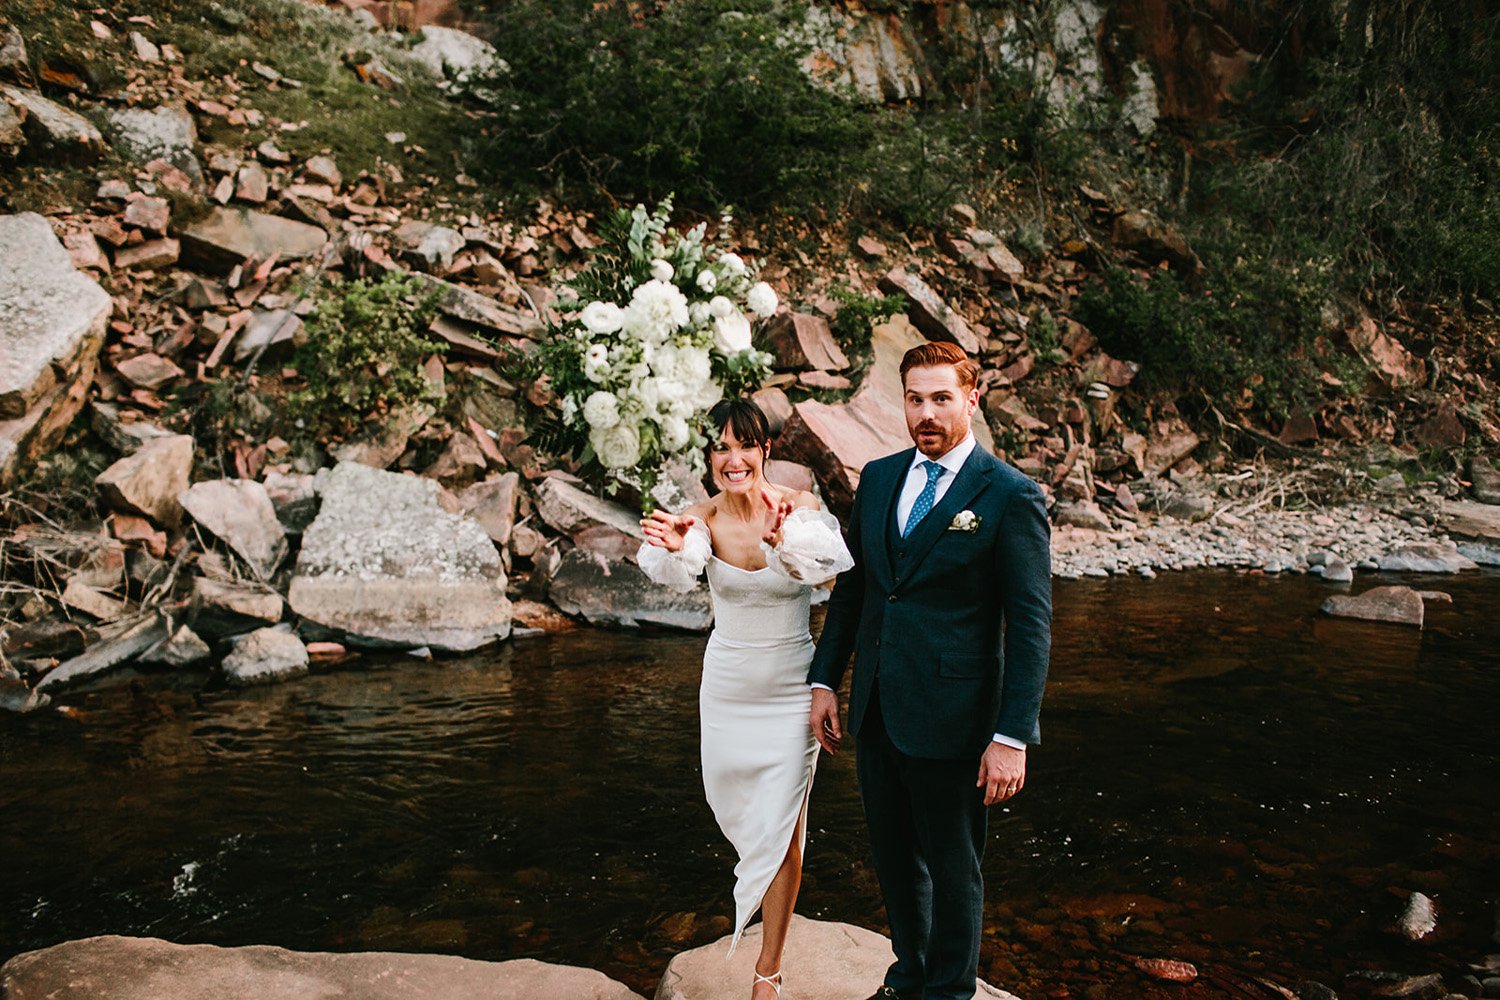 Plume&Furrow-Wedding-Florist-Megan&Jack-TaylerCarlislePhoto-RiverBend-August-Colorado-bride-groom-bouquet-toss.jpg